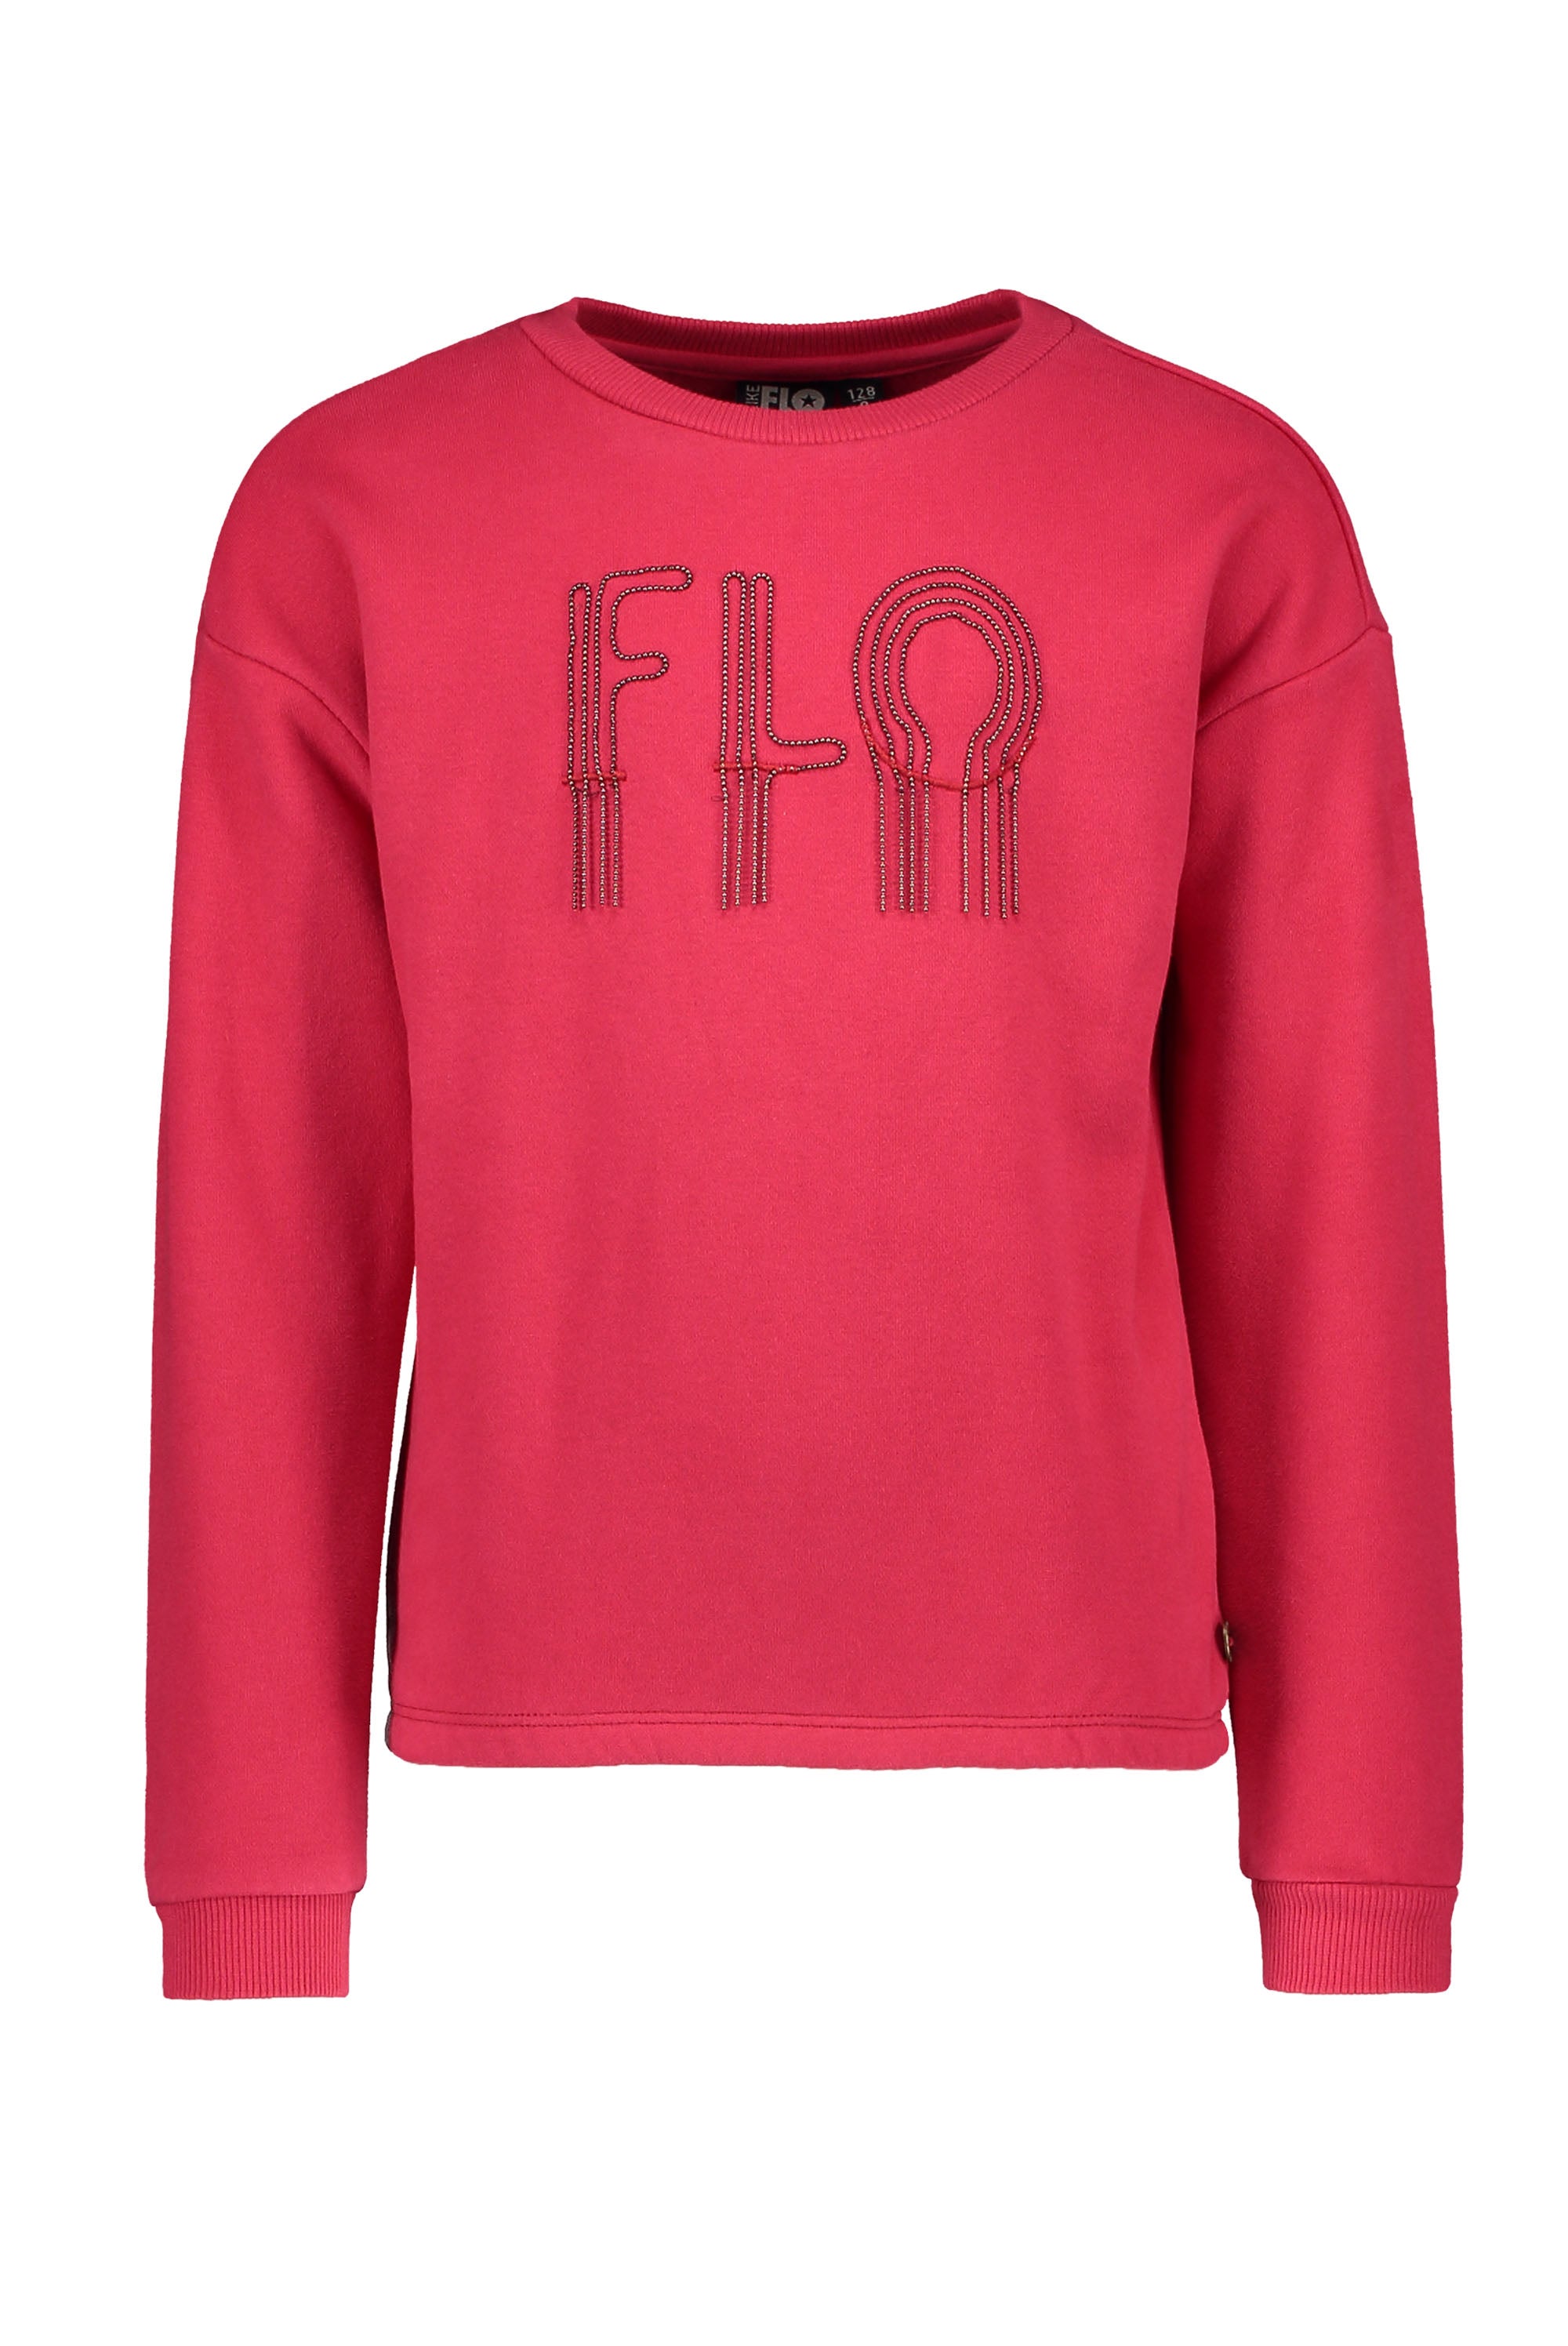 Flo Flo girls sweater diverse